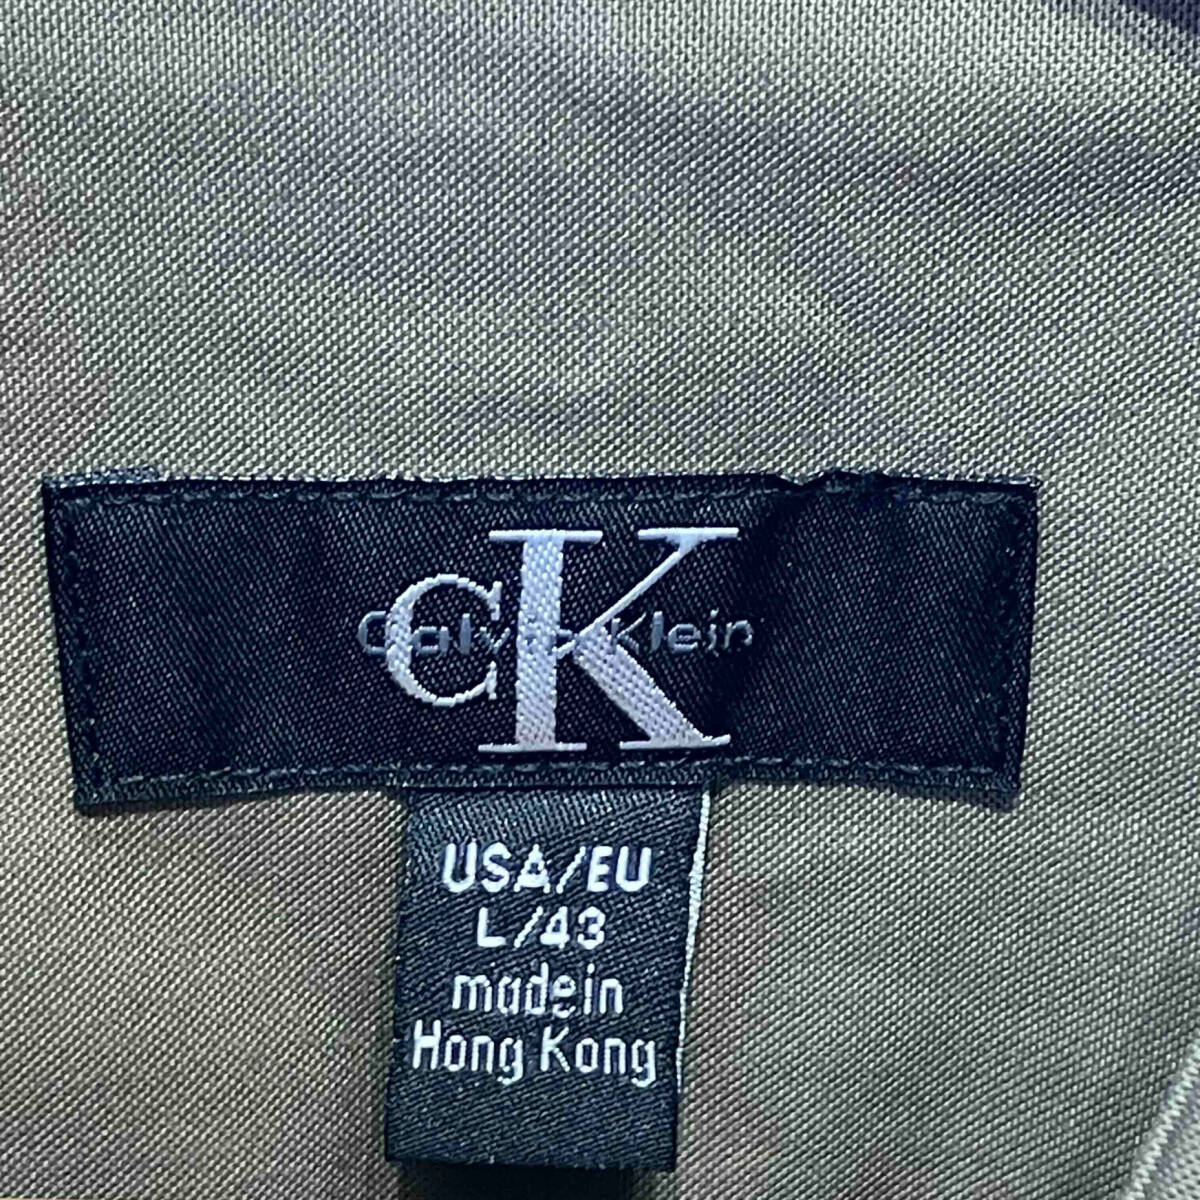 Calvin Klein Work Shirt Jacket DN370 8JO Size:L Khaki カルバン・クライン ワークシャツジャケット カーキ_画像3